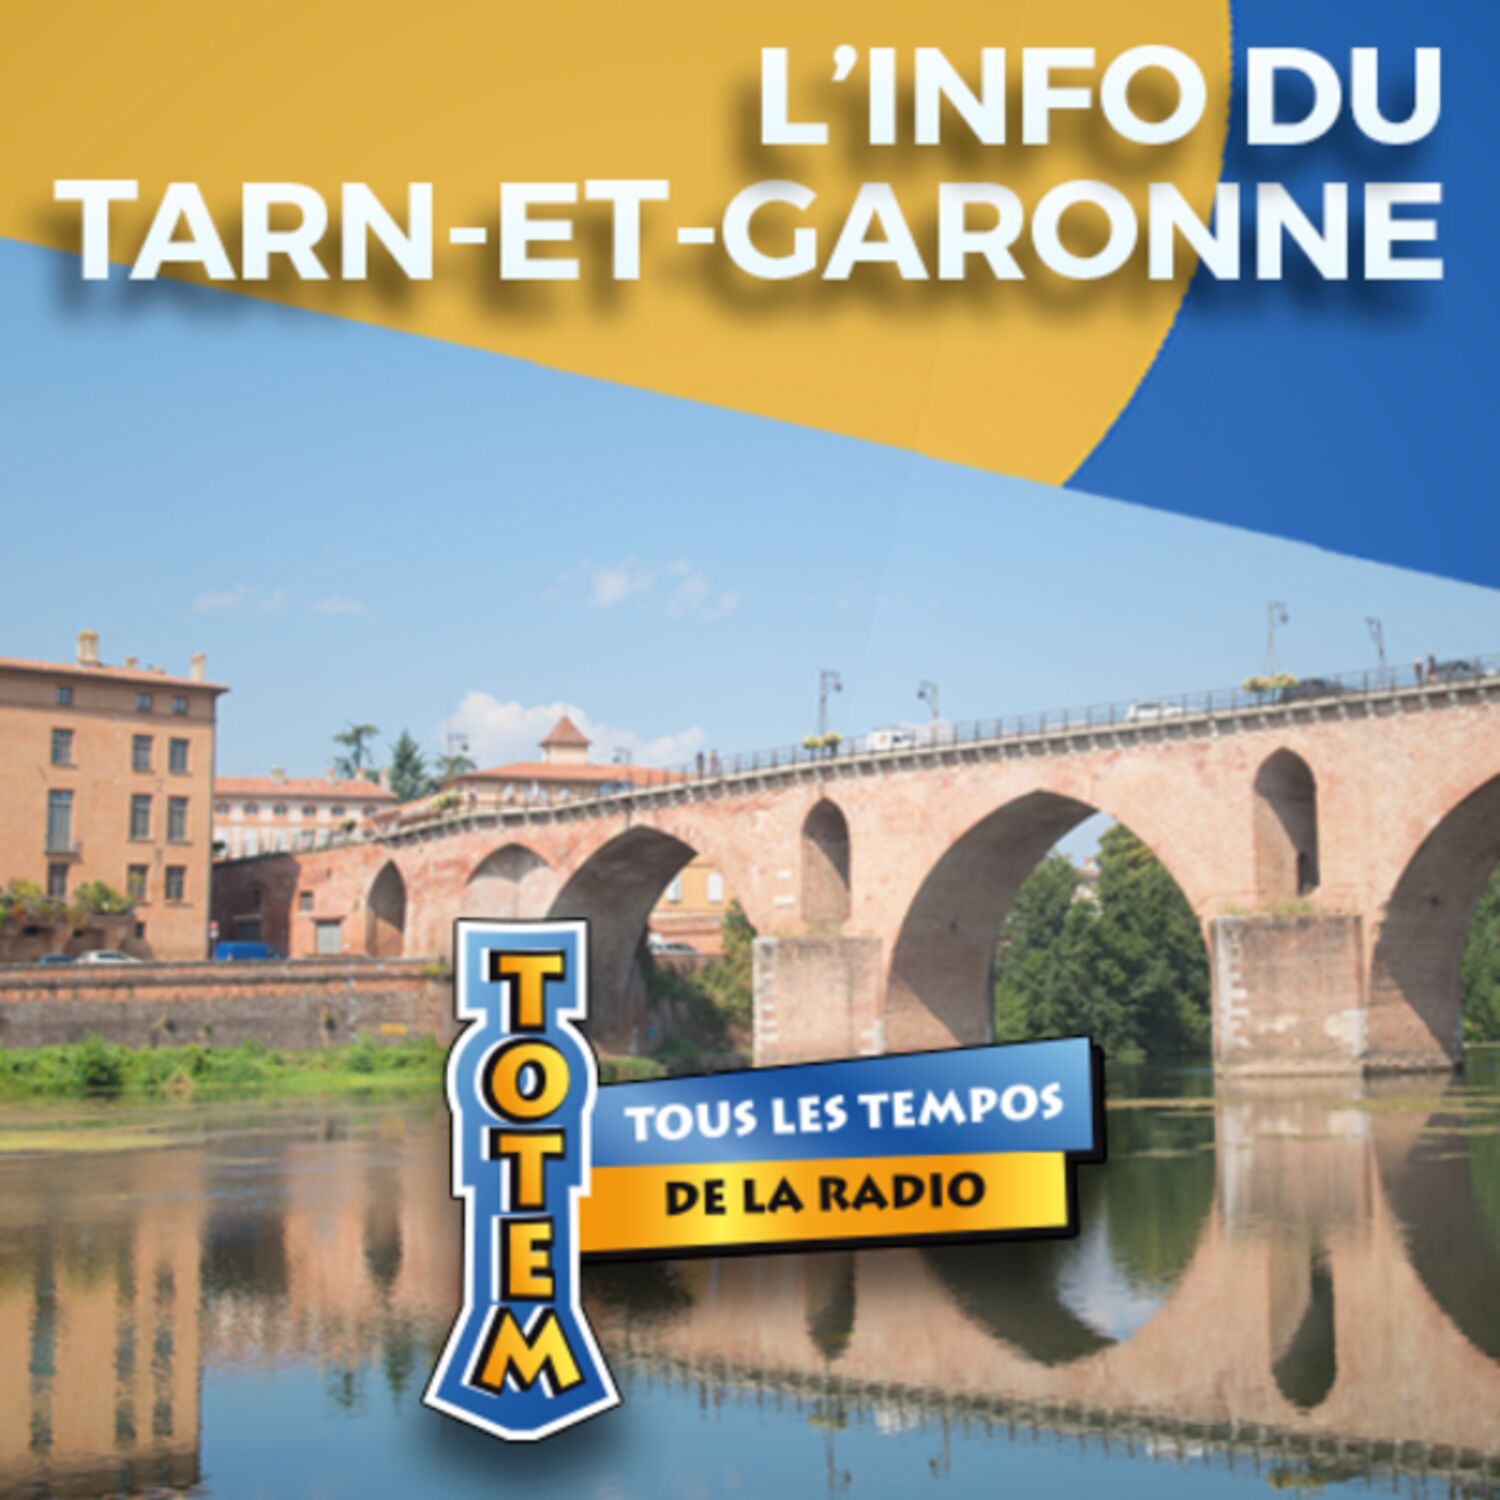 L'info du Tarn-et-Garonne du 21/04/23 à 08h29